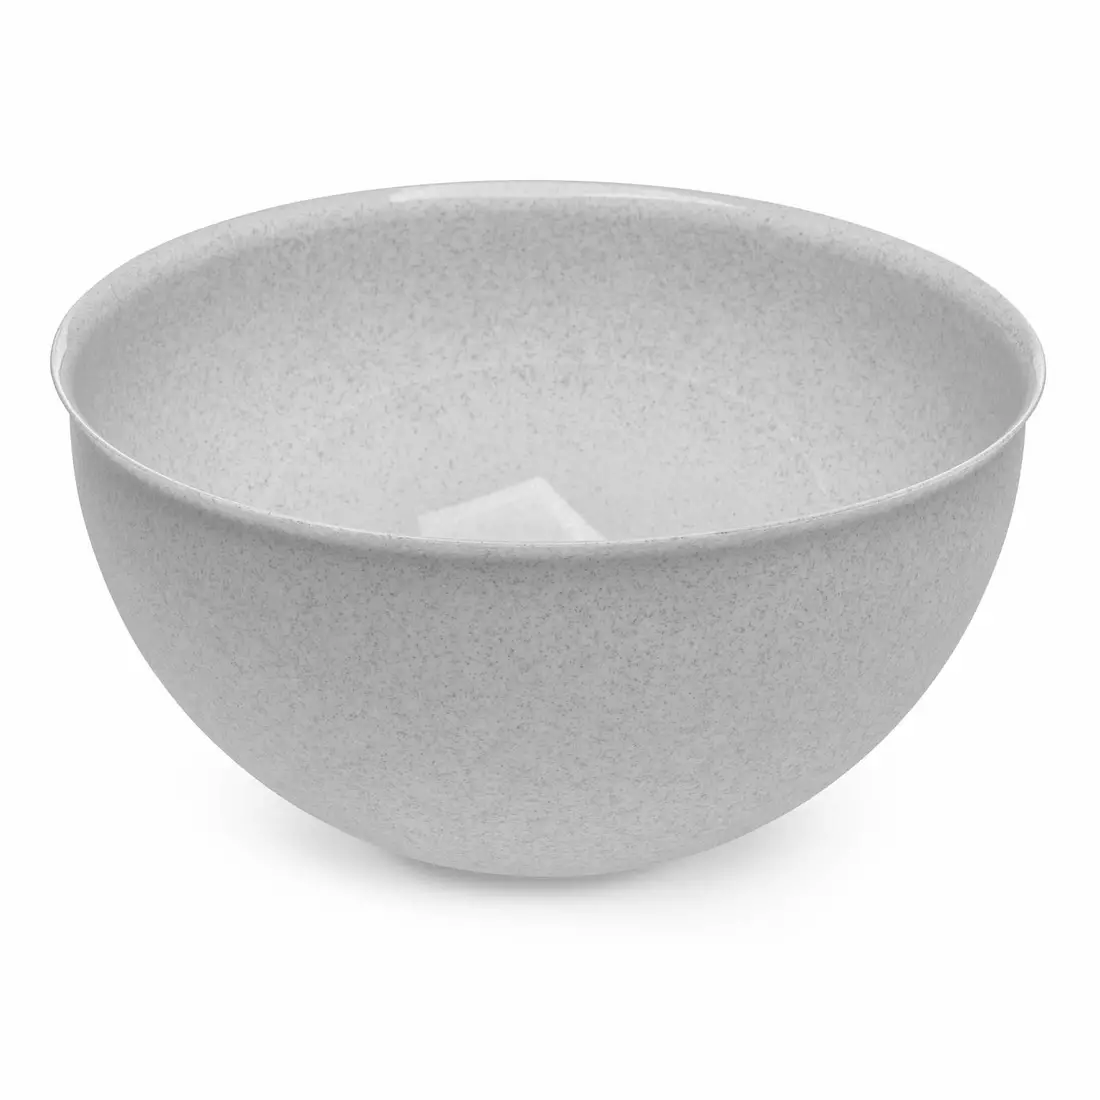 Koziol Palsby L bowl 5l, organic grey